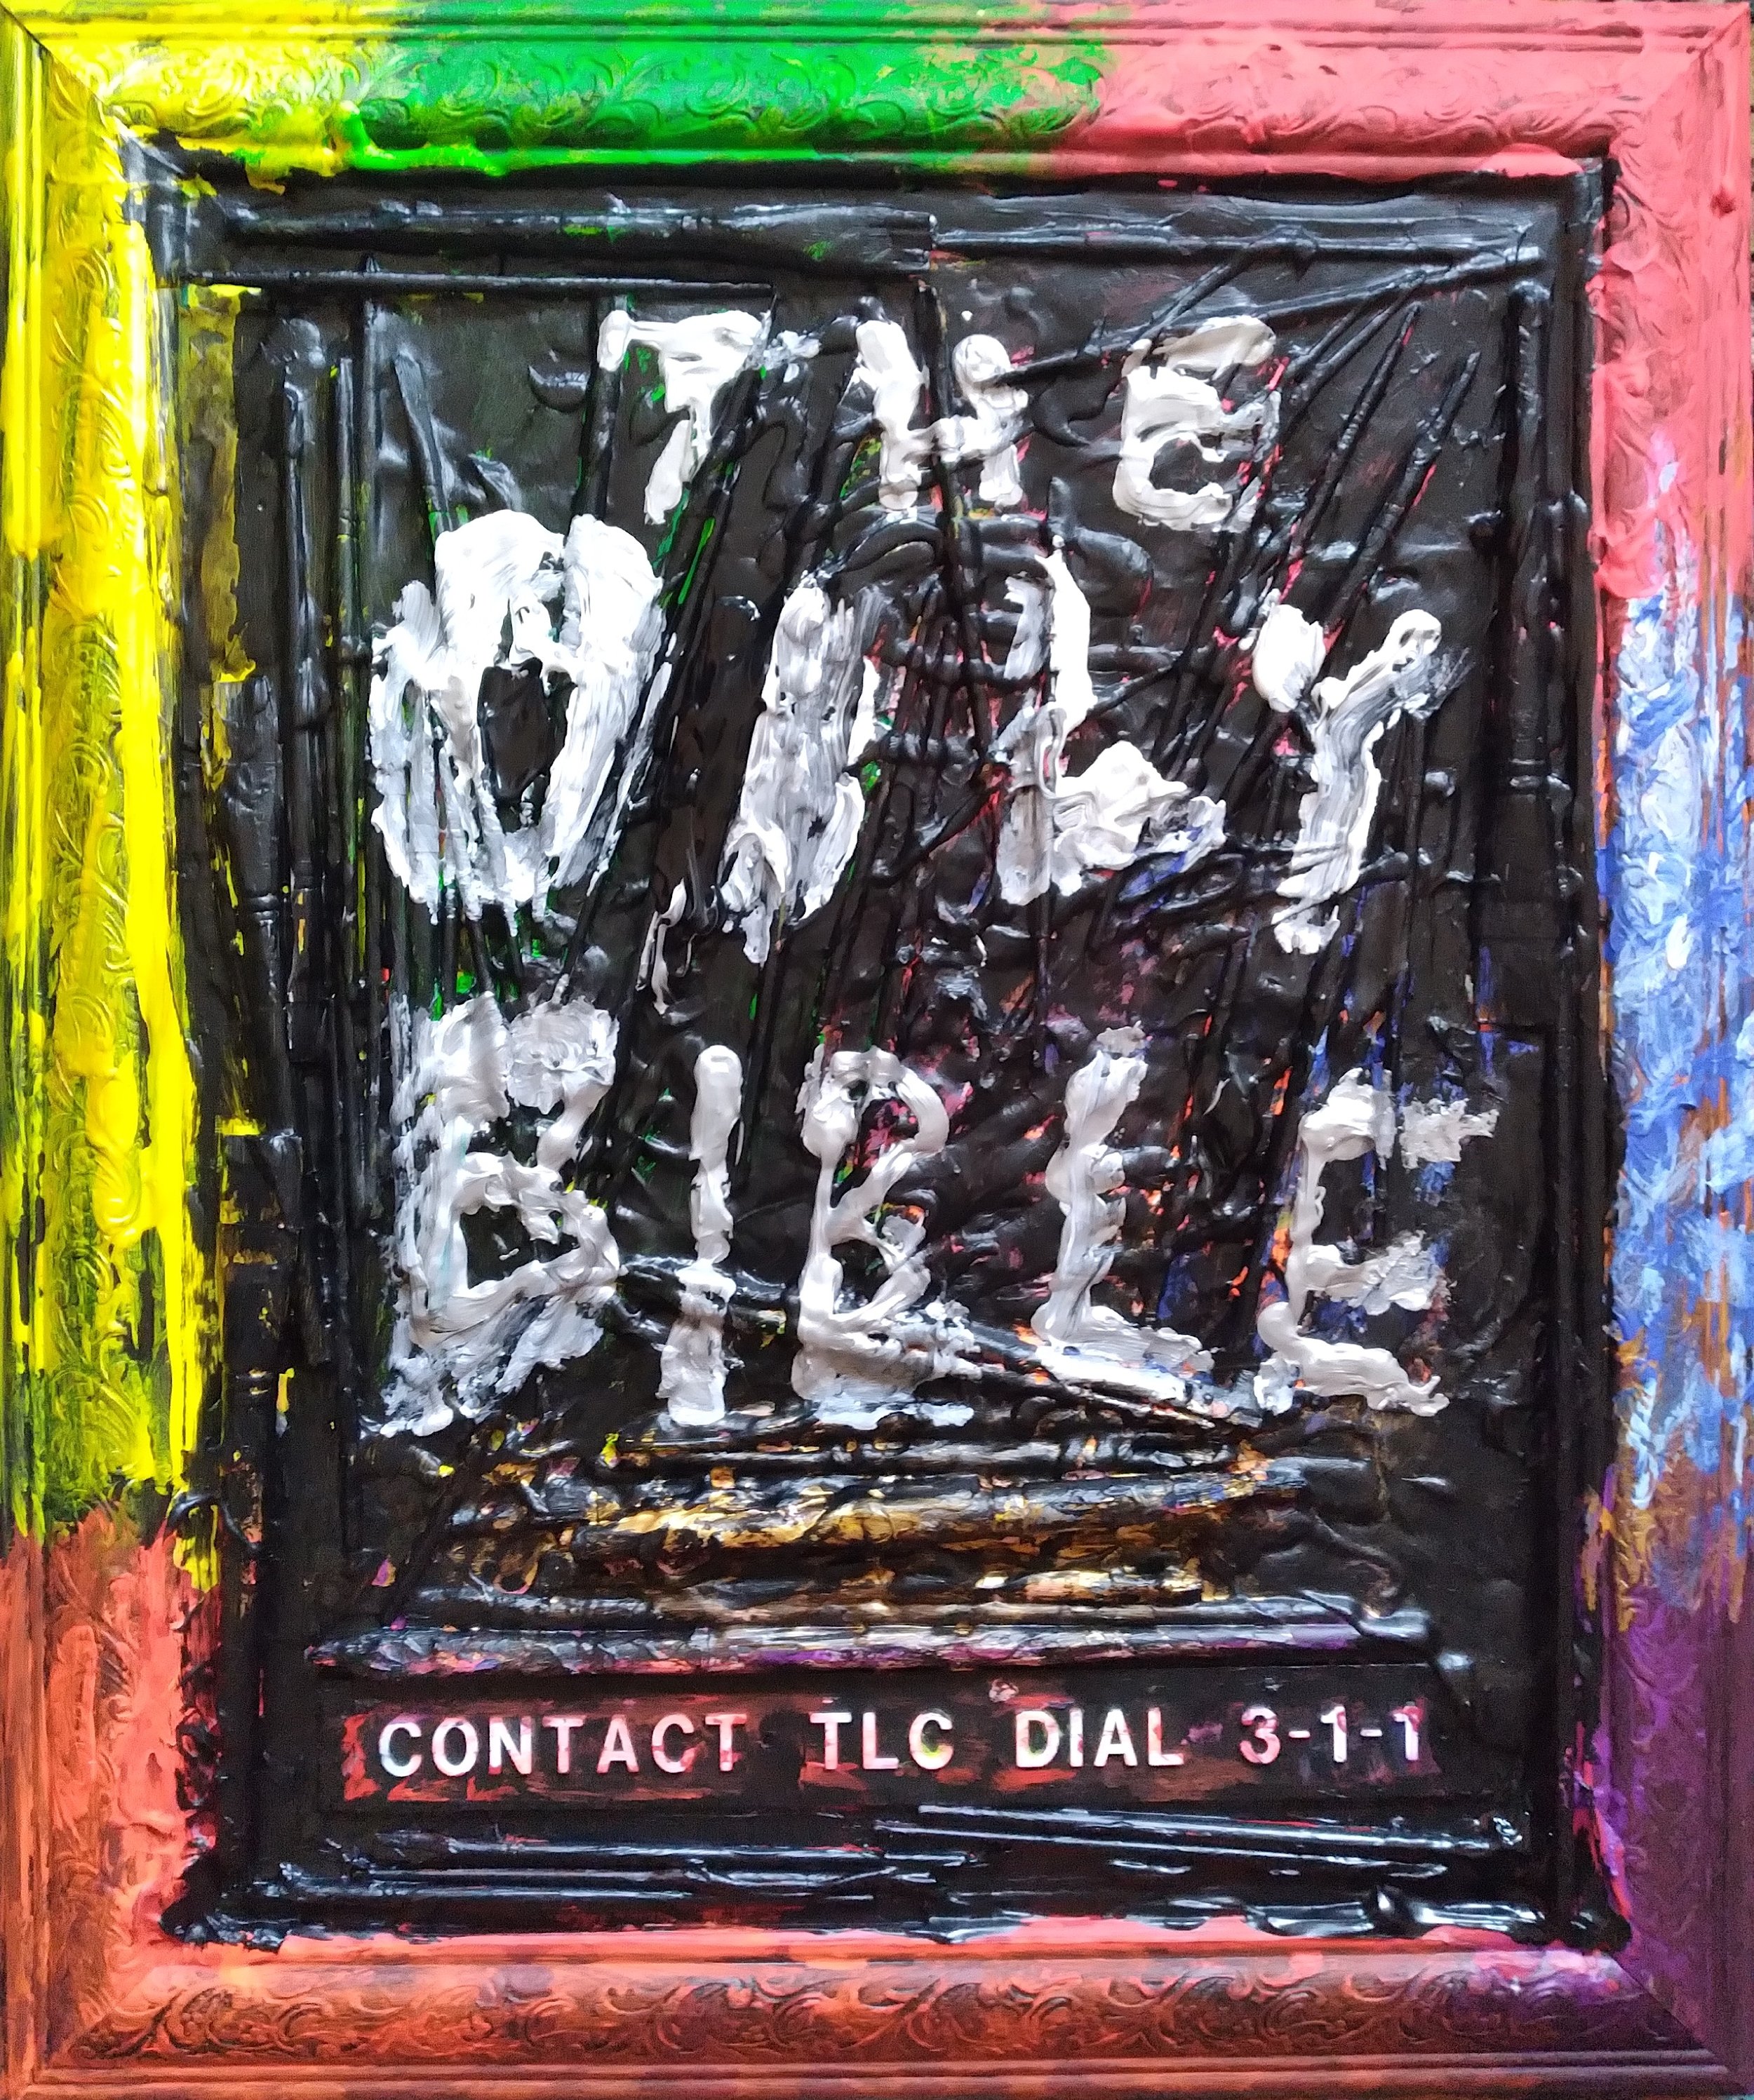 TLC, 2008. Oil, acrylic, mixed media on canvas. 24” x 20”.